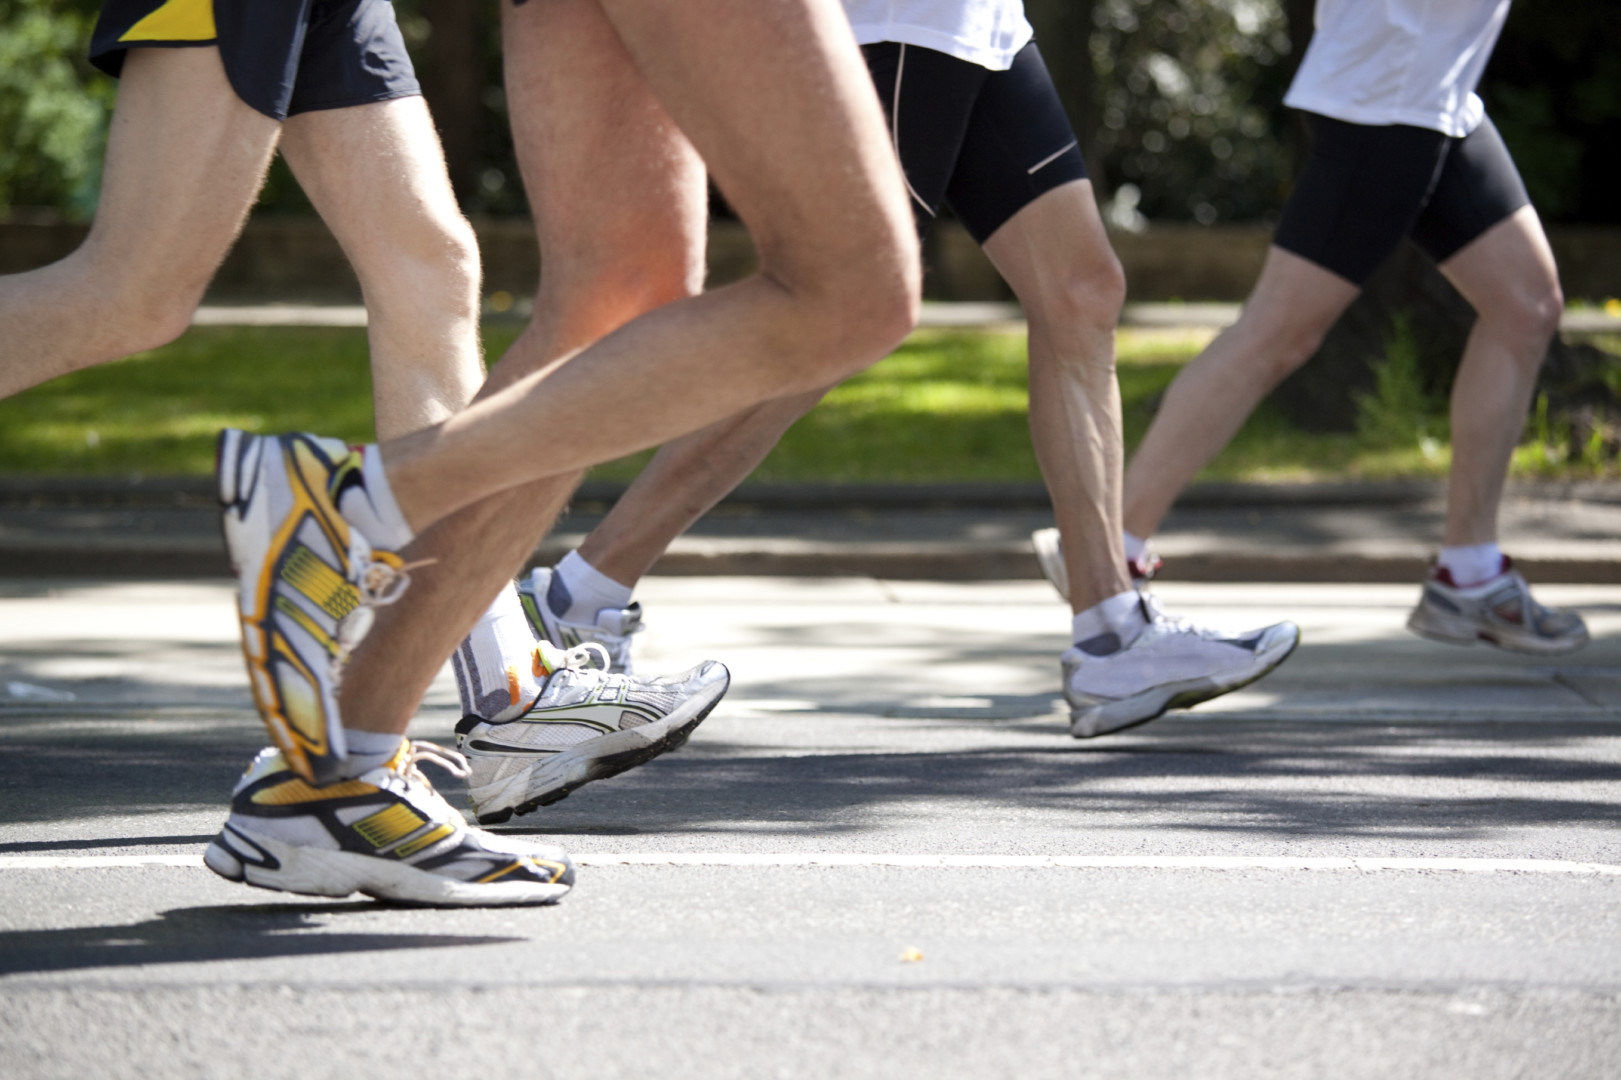 marathon legs in motion on street